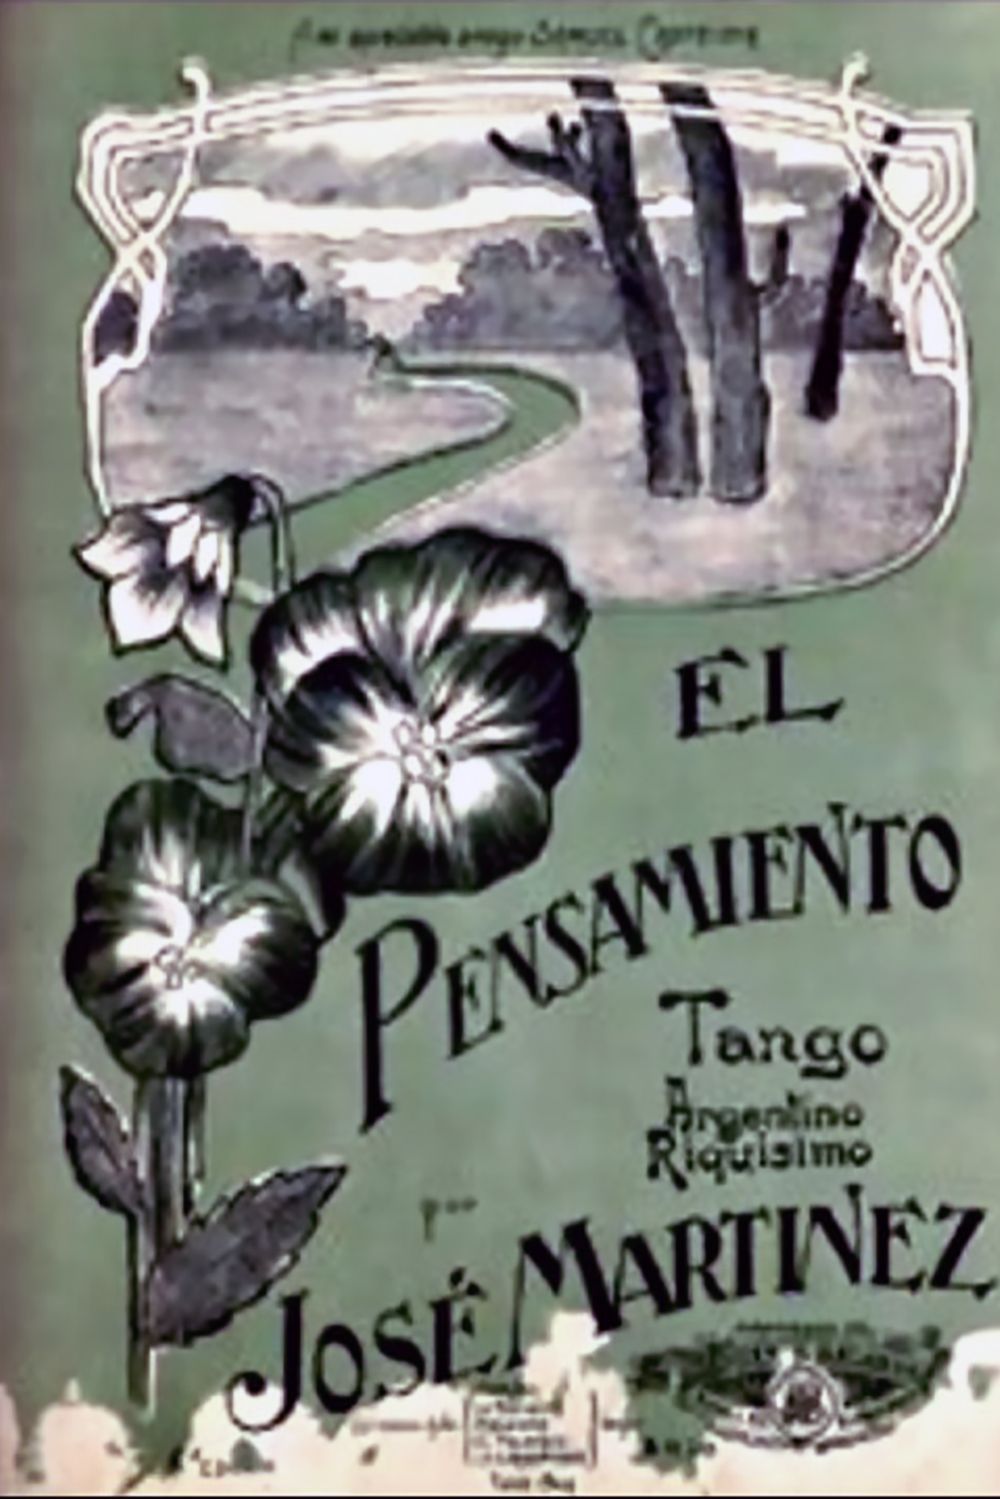 "El pensamiento", Argentine Tango music sheet cover.